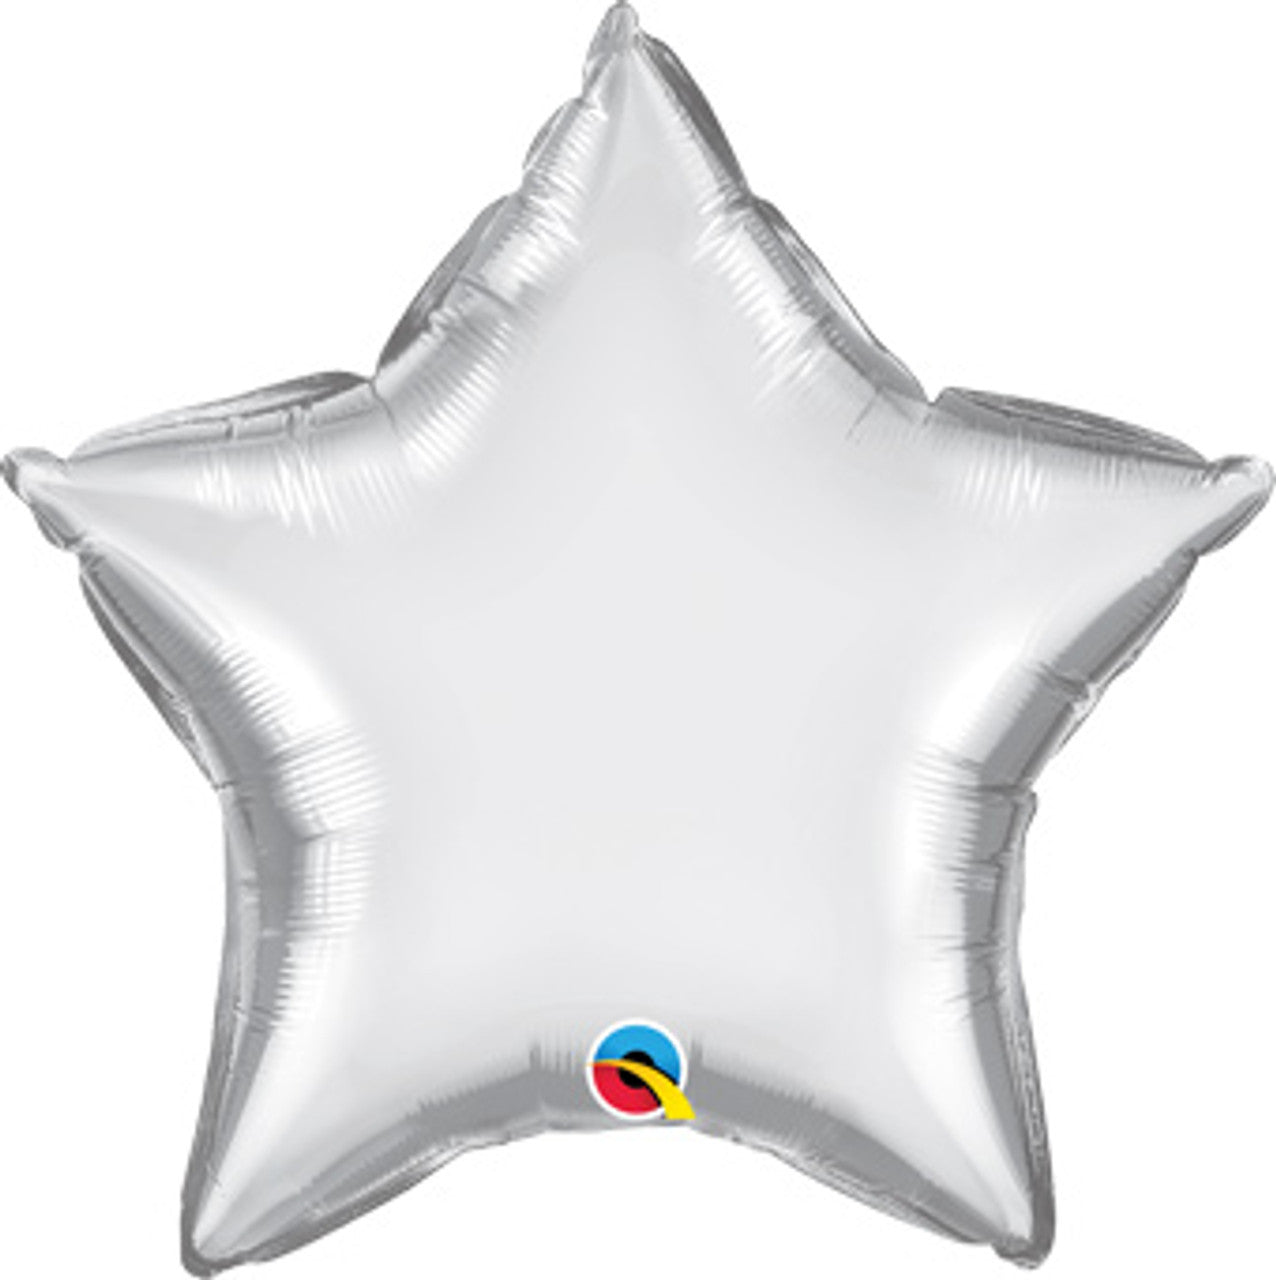 Silver Star Foil balloon 20"